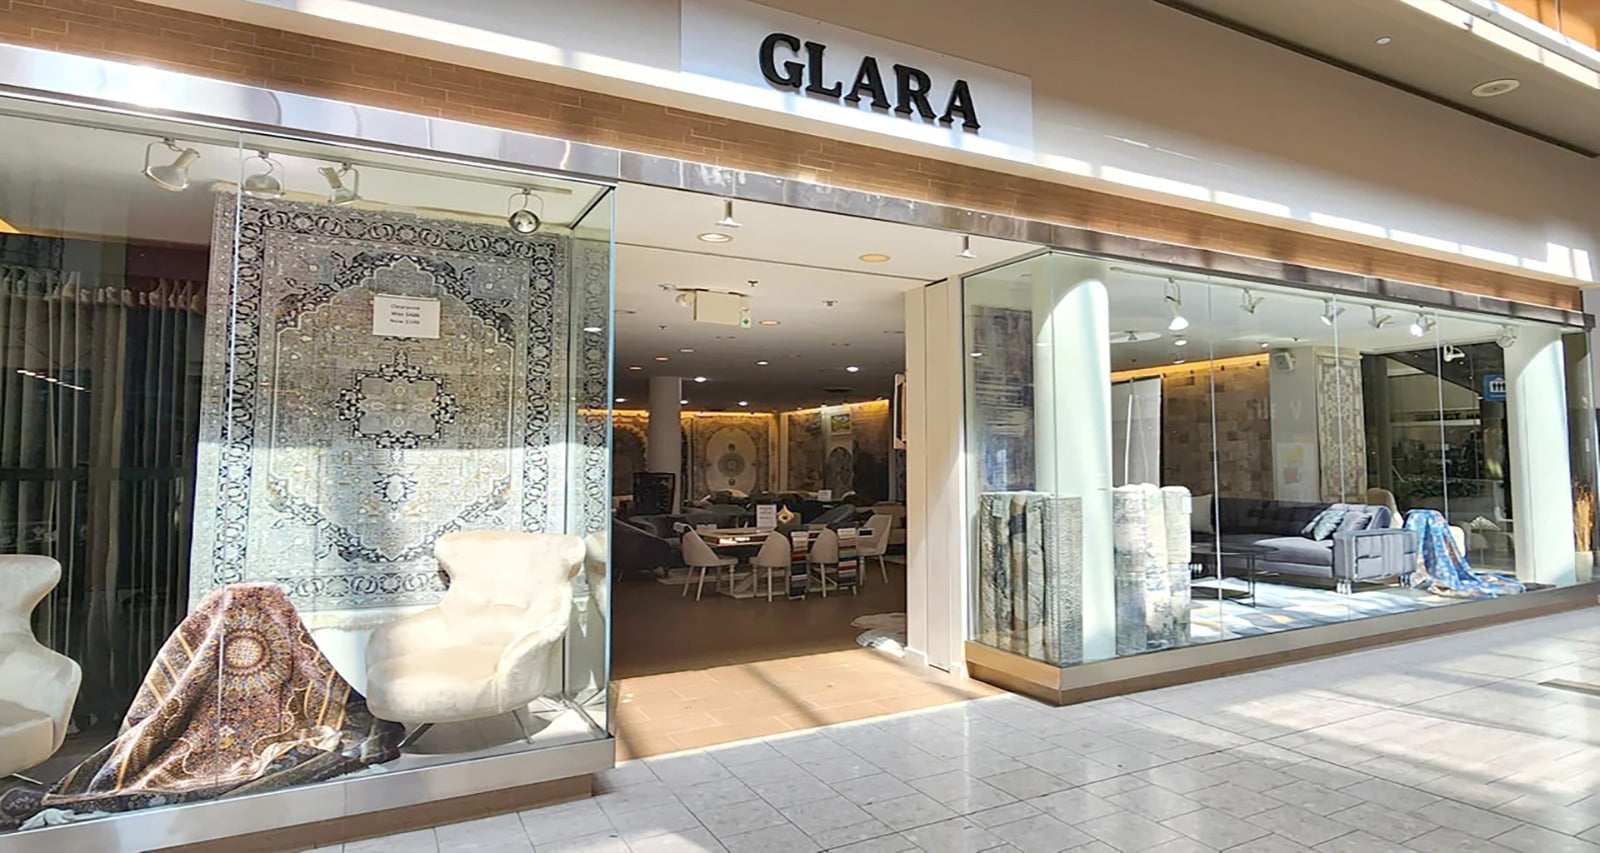 capilano mall north vancouver glara shop. glara home furniture and rugs. persian rug